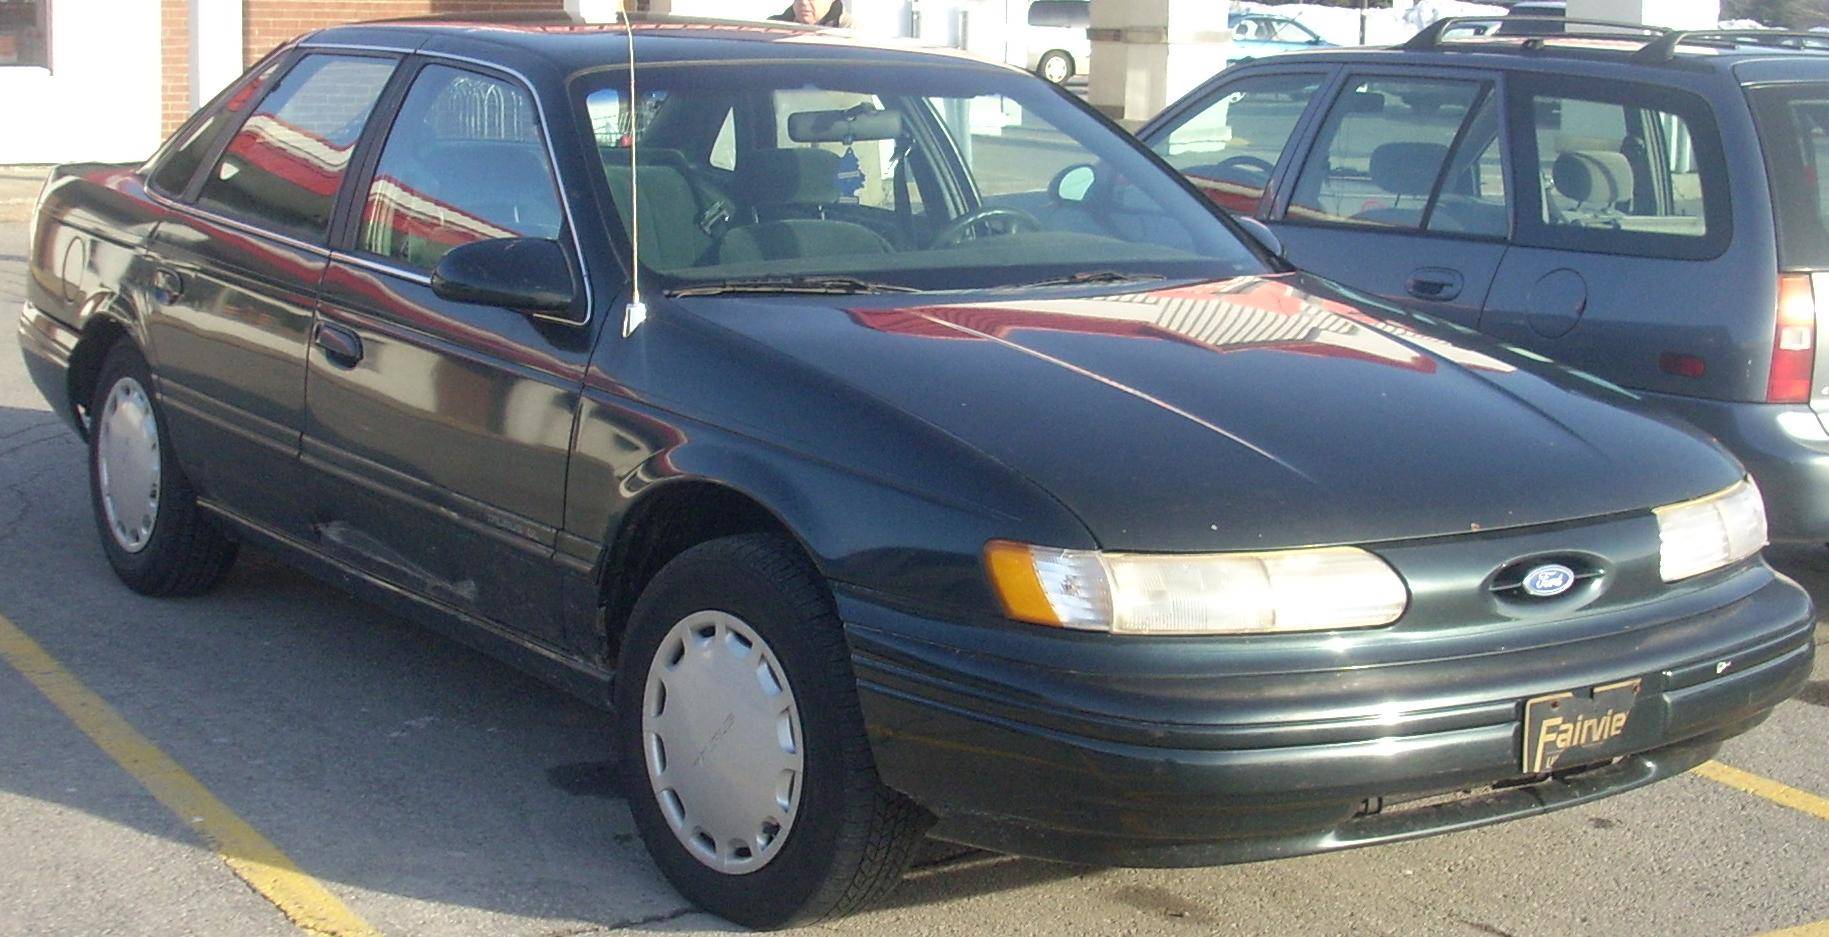 Купить форд таурус. Ford Taurus 1993. Форд Таурус 1993. Форд Таурус 1993 3.0. Форд Таурус Sho 1993.